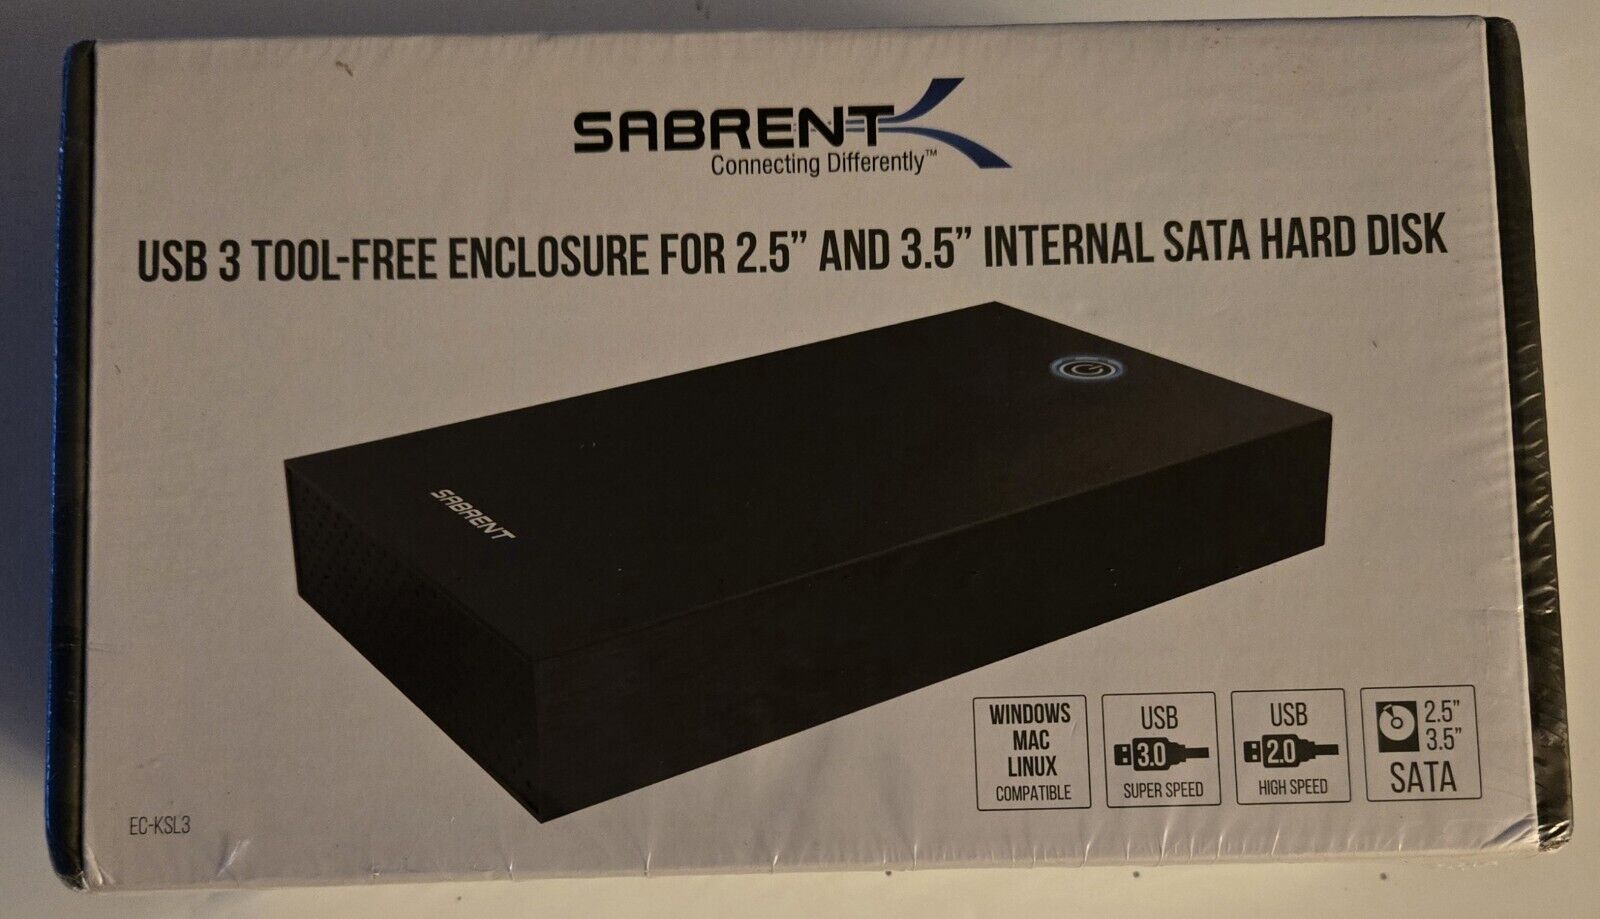 SABRENT USB 3.0 Tool Free Enclosure for 2.5” and 3.5” EC-KSL3, New In Box